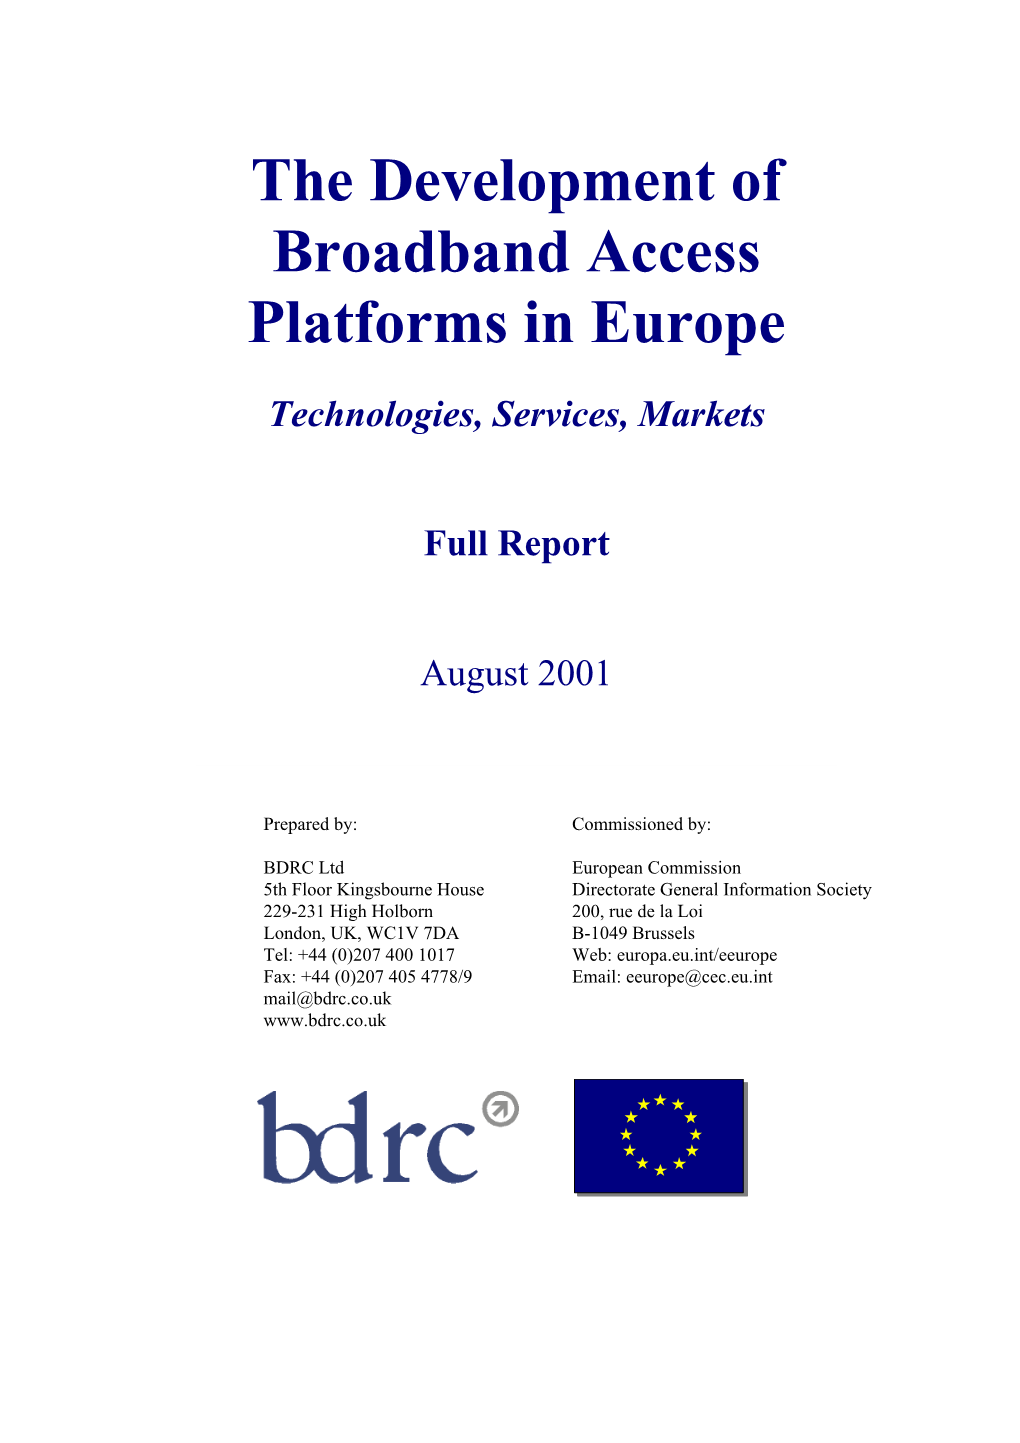 The Development of Broadband Access Platforms in Europe